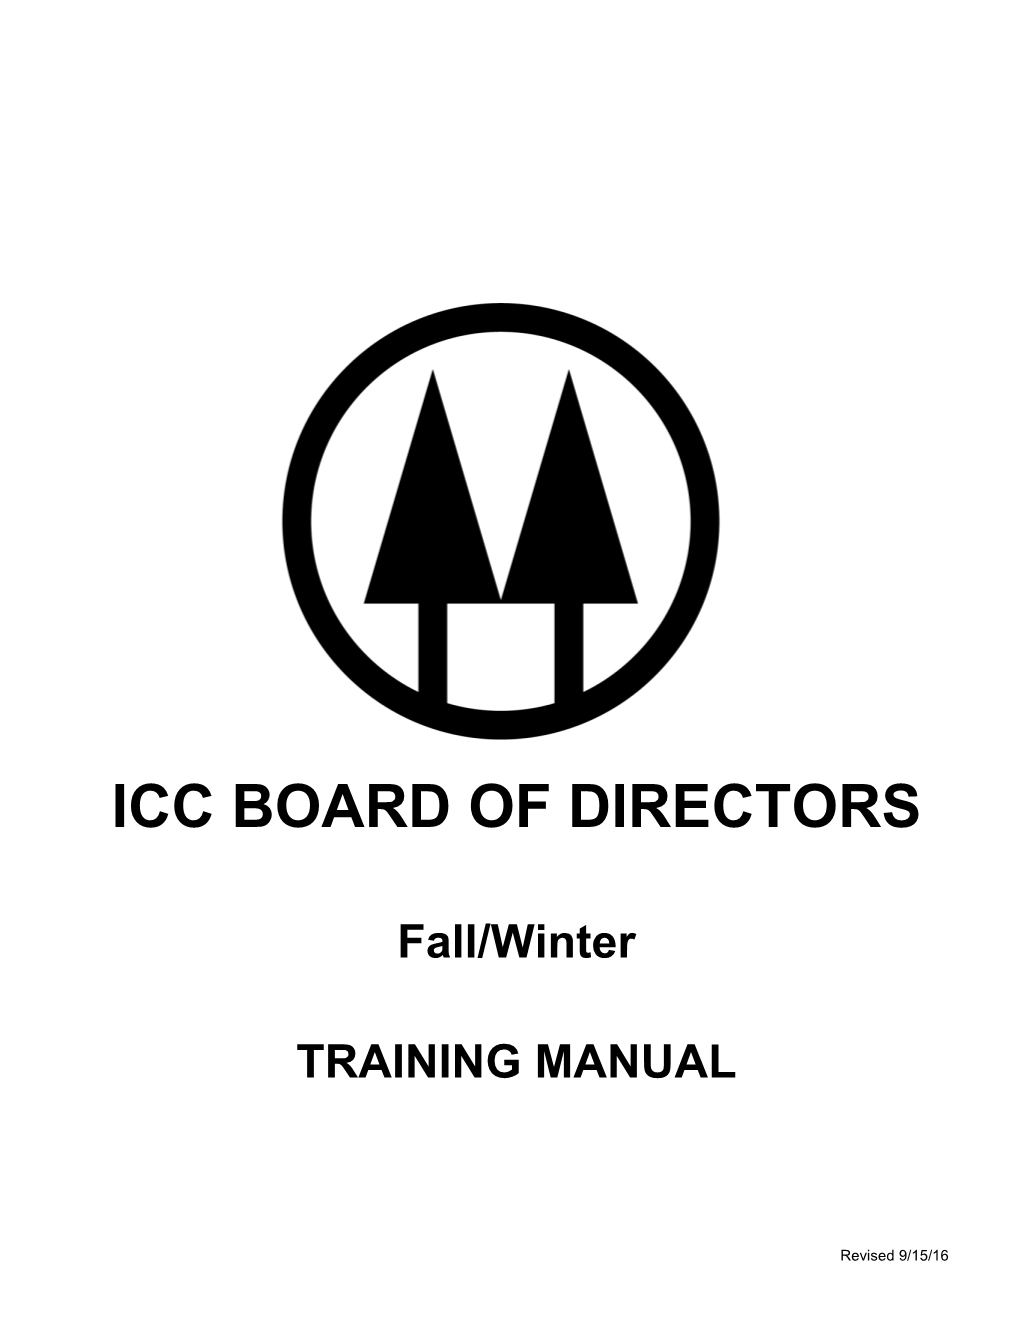 Icc Board of Directors